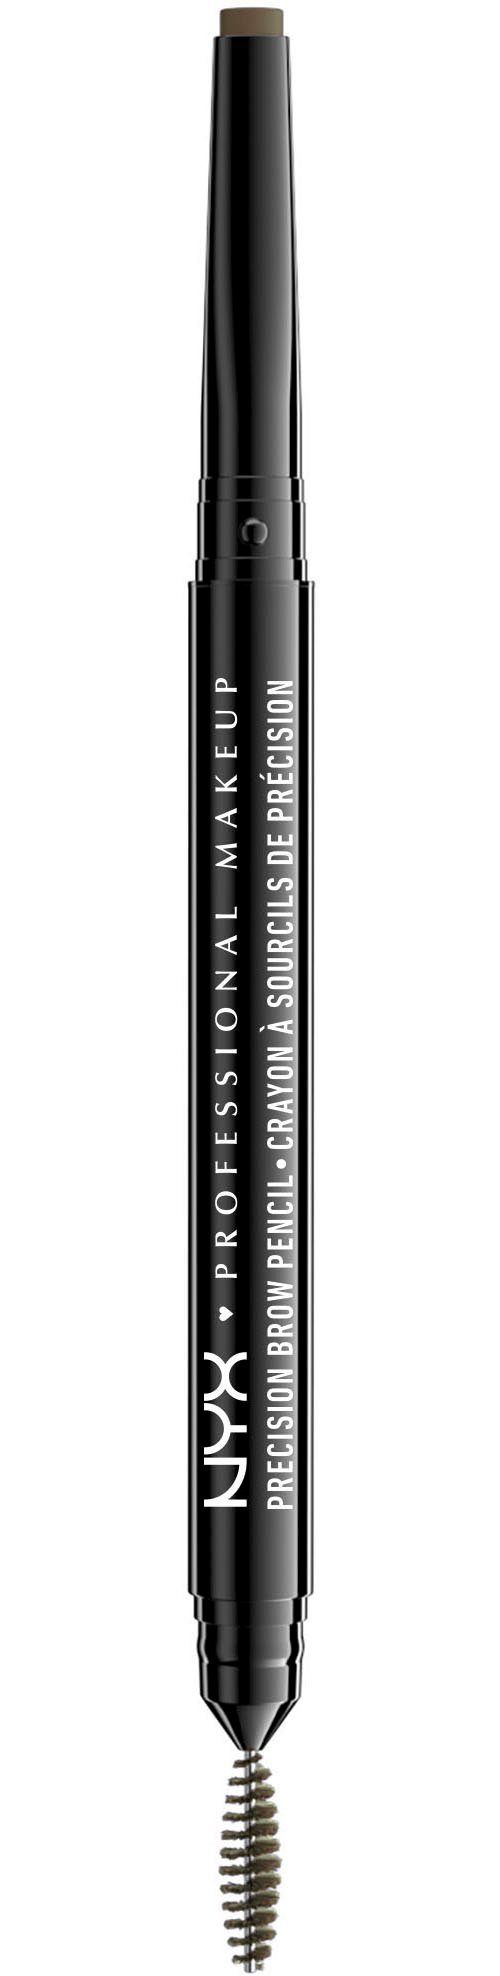 NYX Precision Makeup Augenbrauen-Stift Brow Professional Pencil taupe